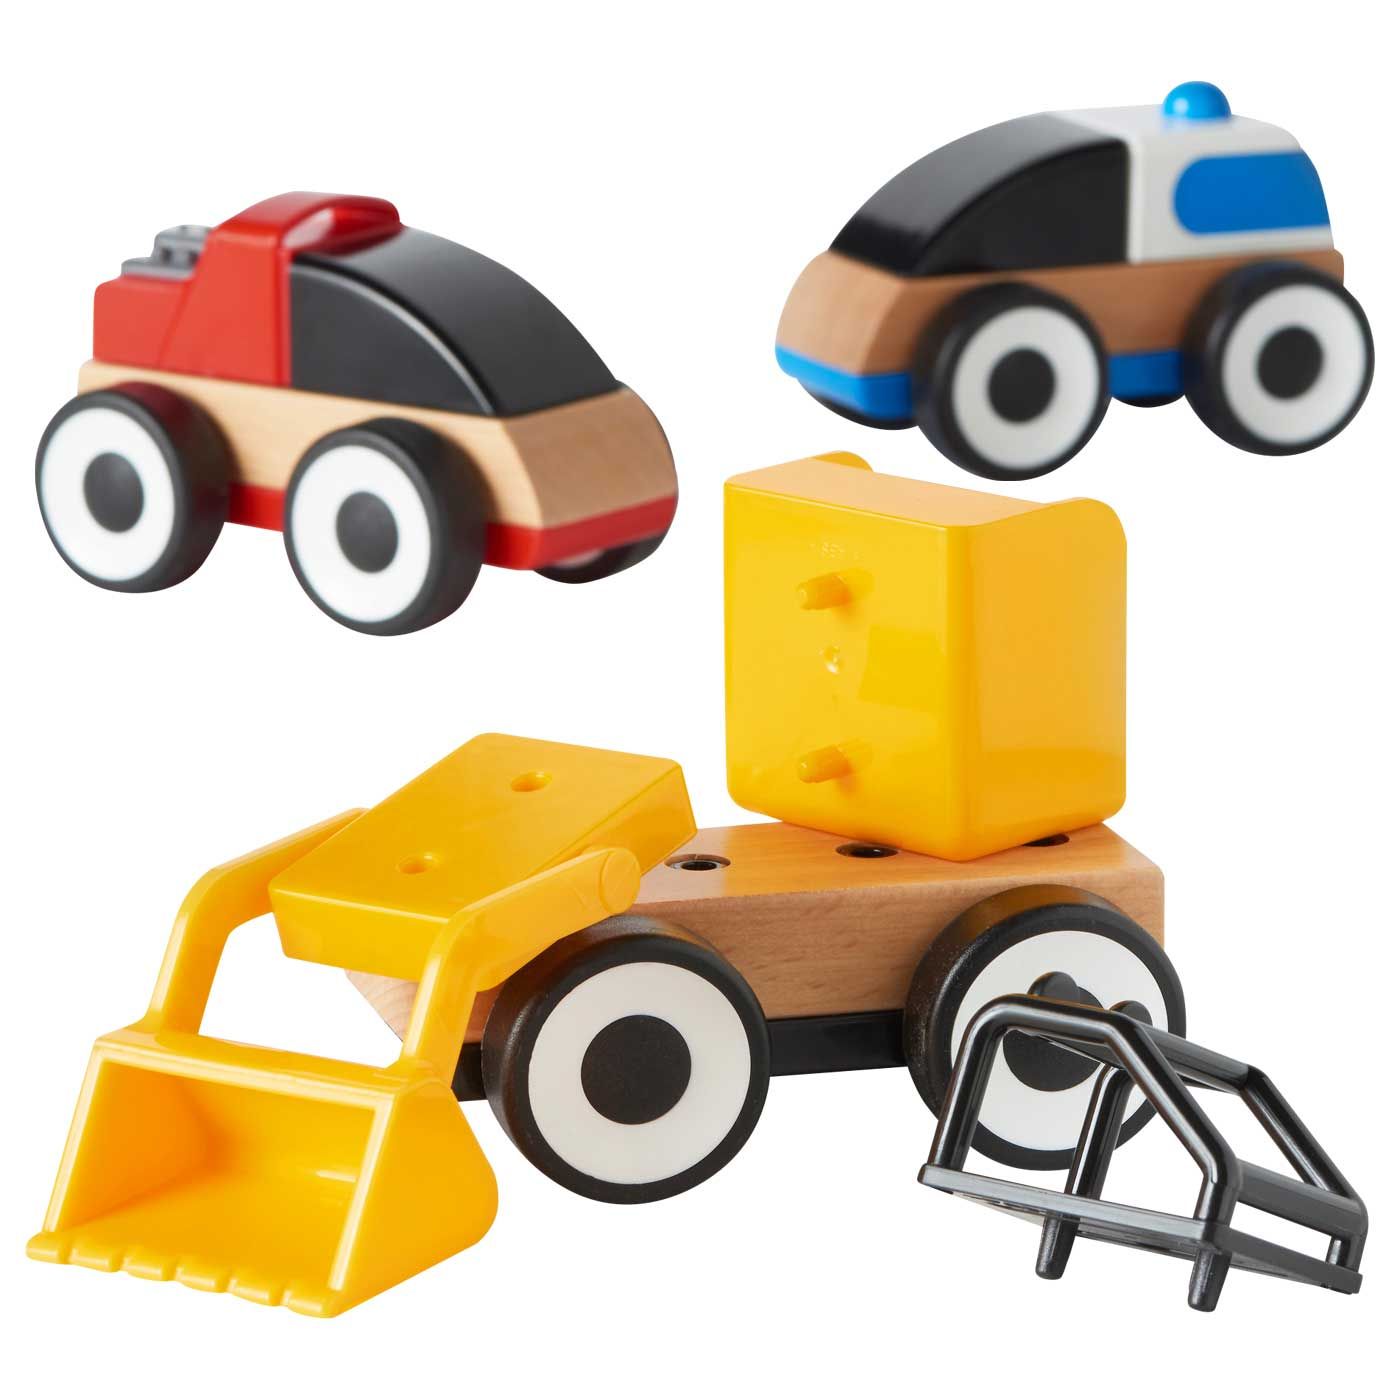 IKEA Lillabo Toy Vehicle - 3